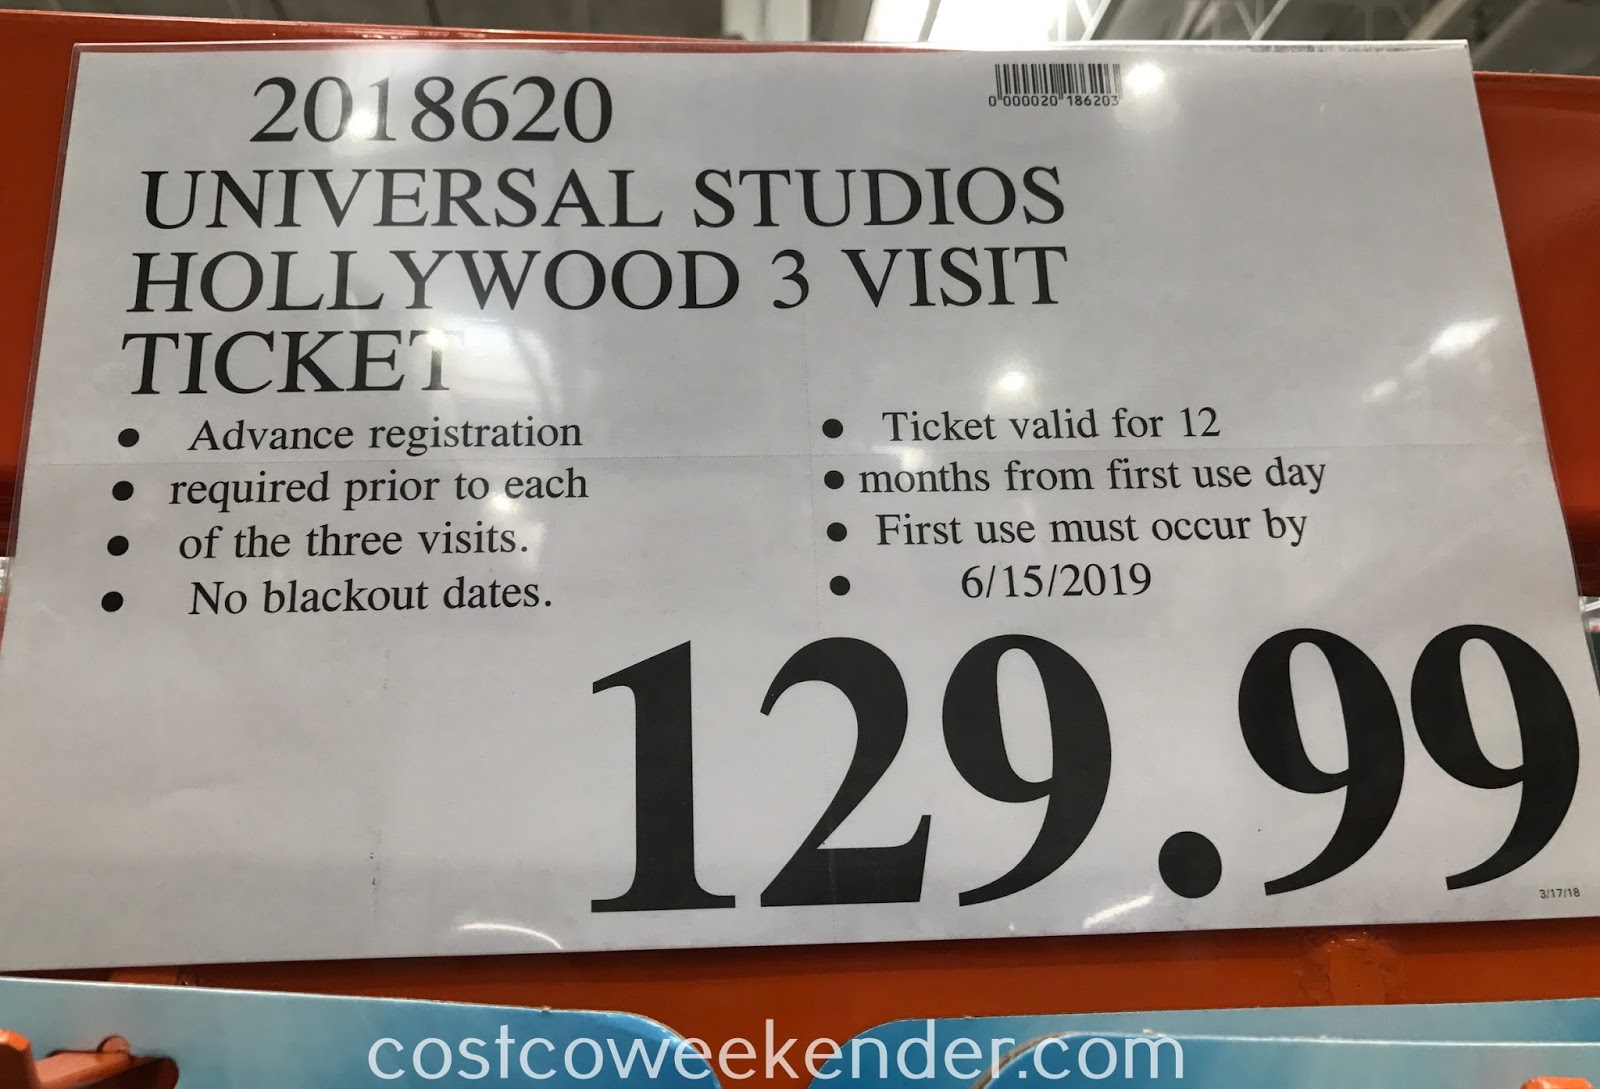 Costco 2018620 Universal Studios Hollywood 3 Visit Ticket 